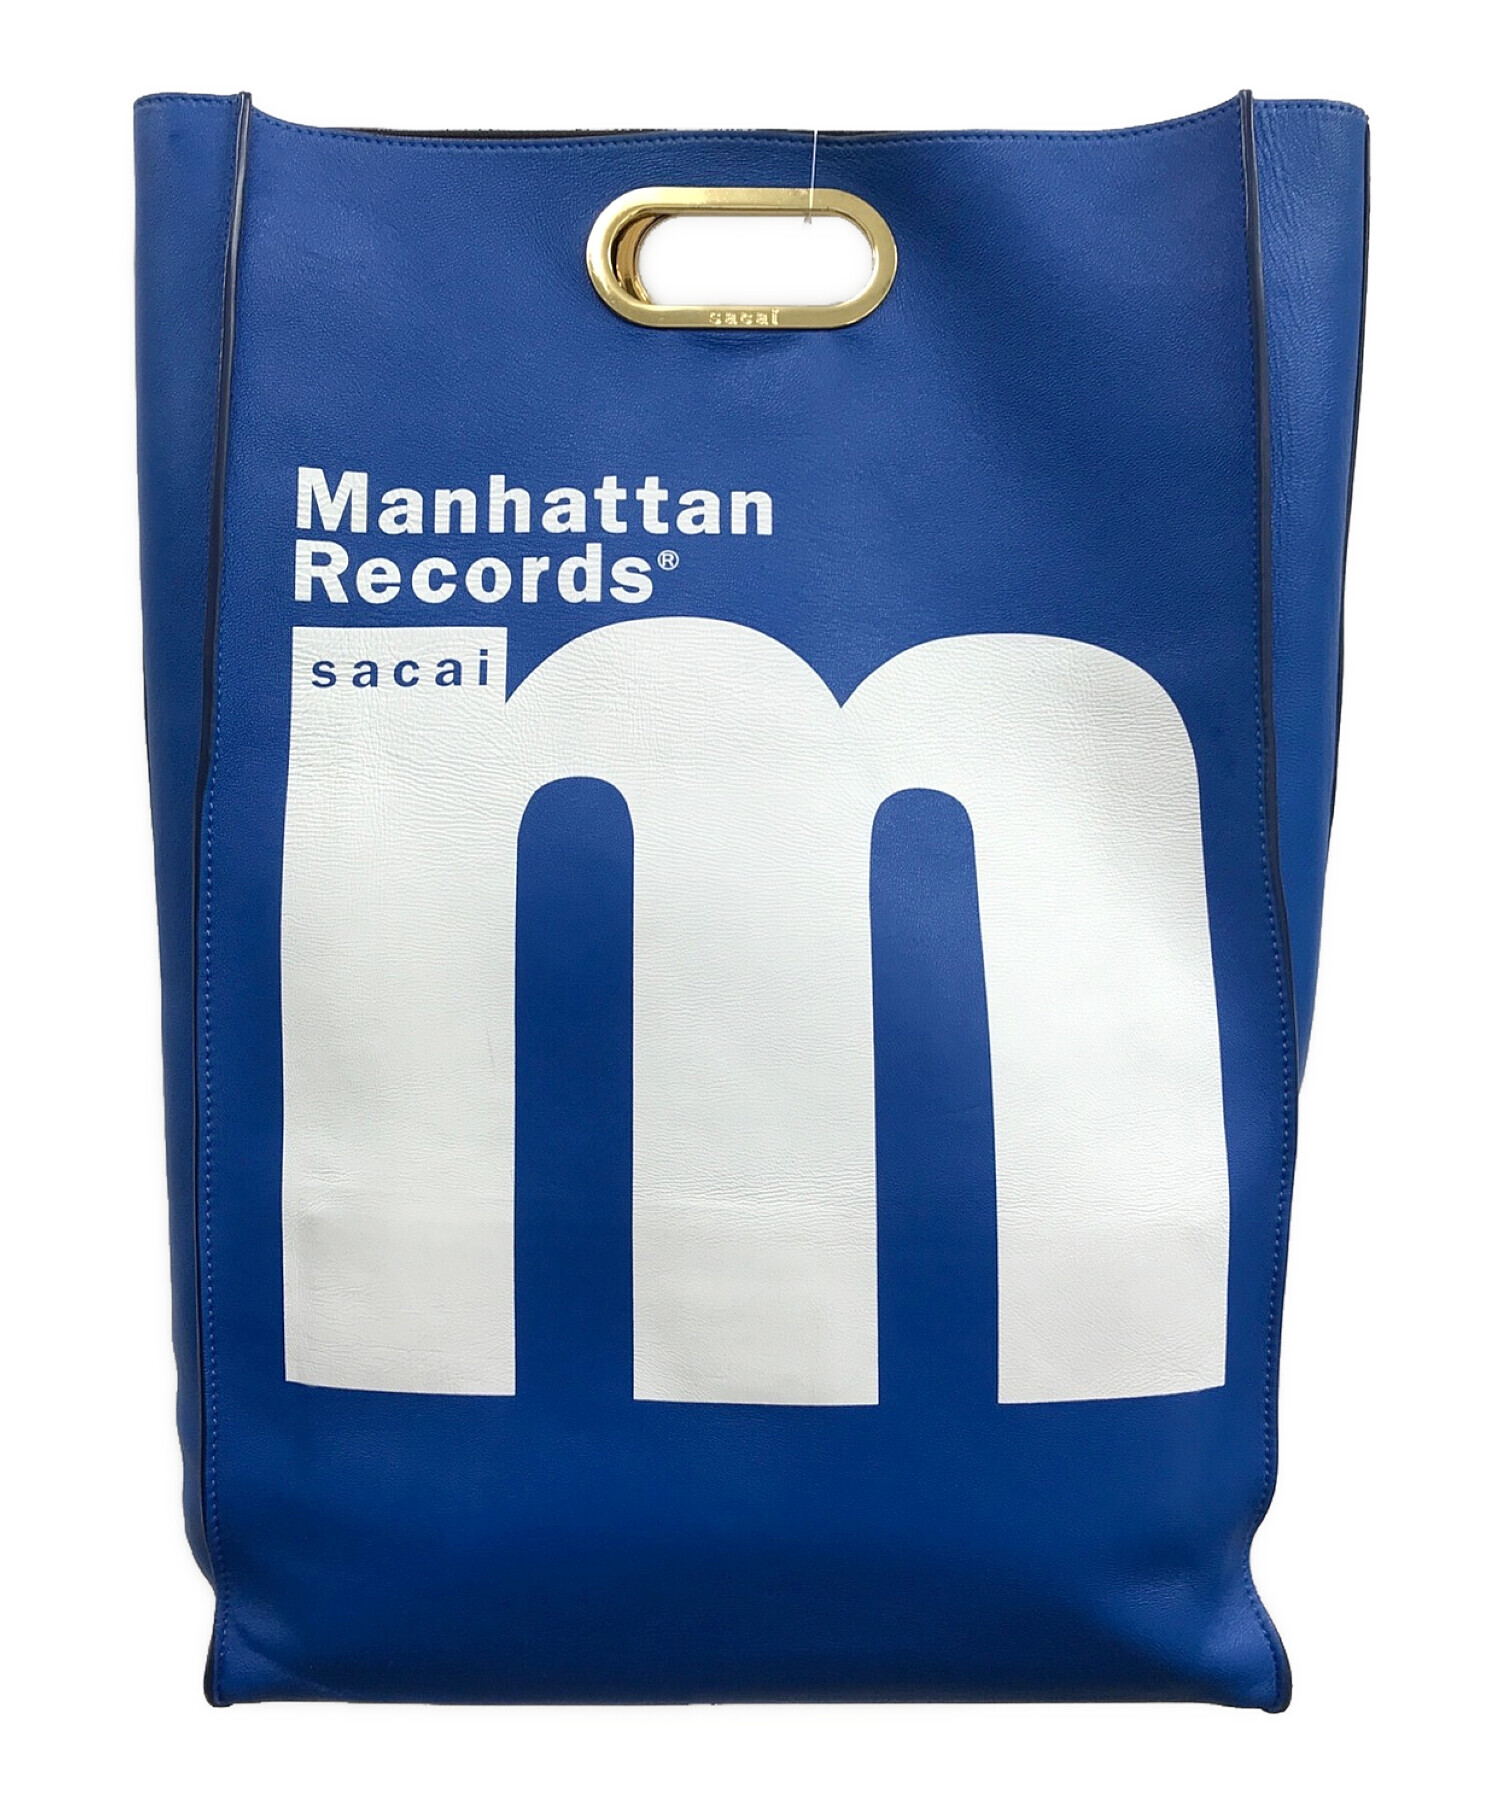 sacai × Manhattan records bag 2018AW内部は特に目立ったダメージなし